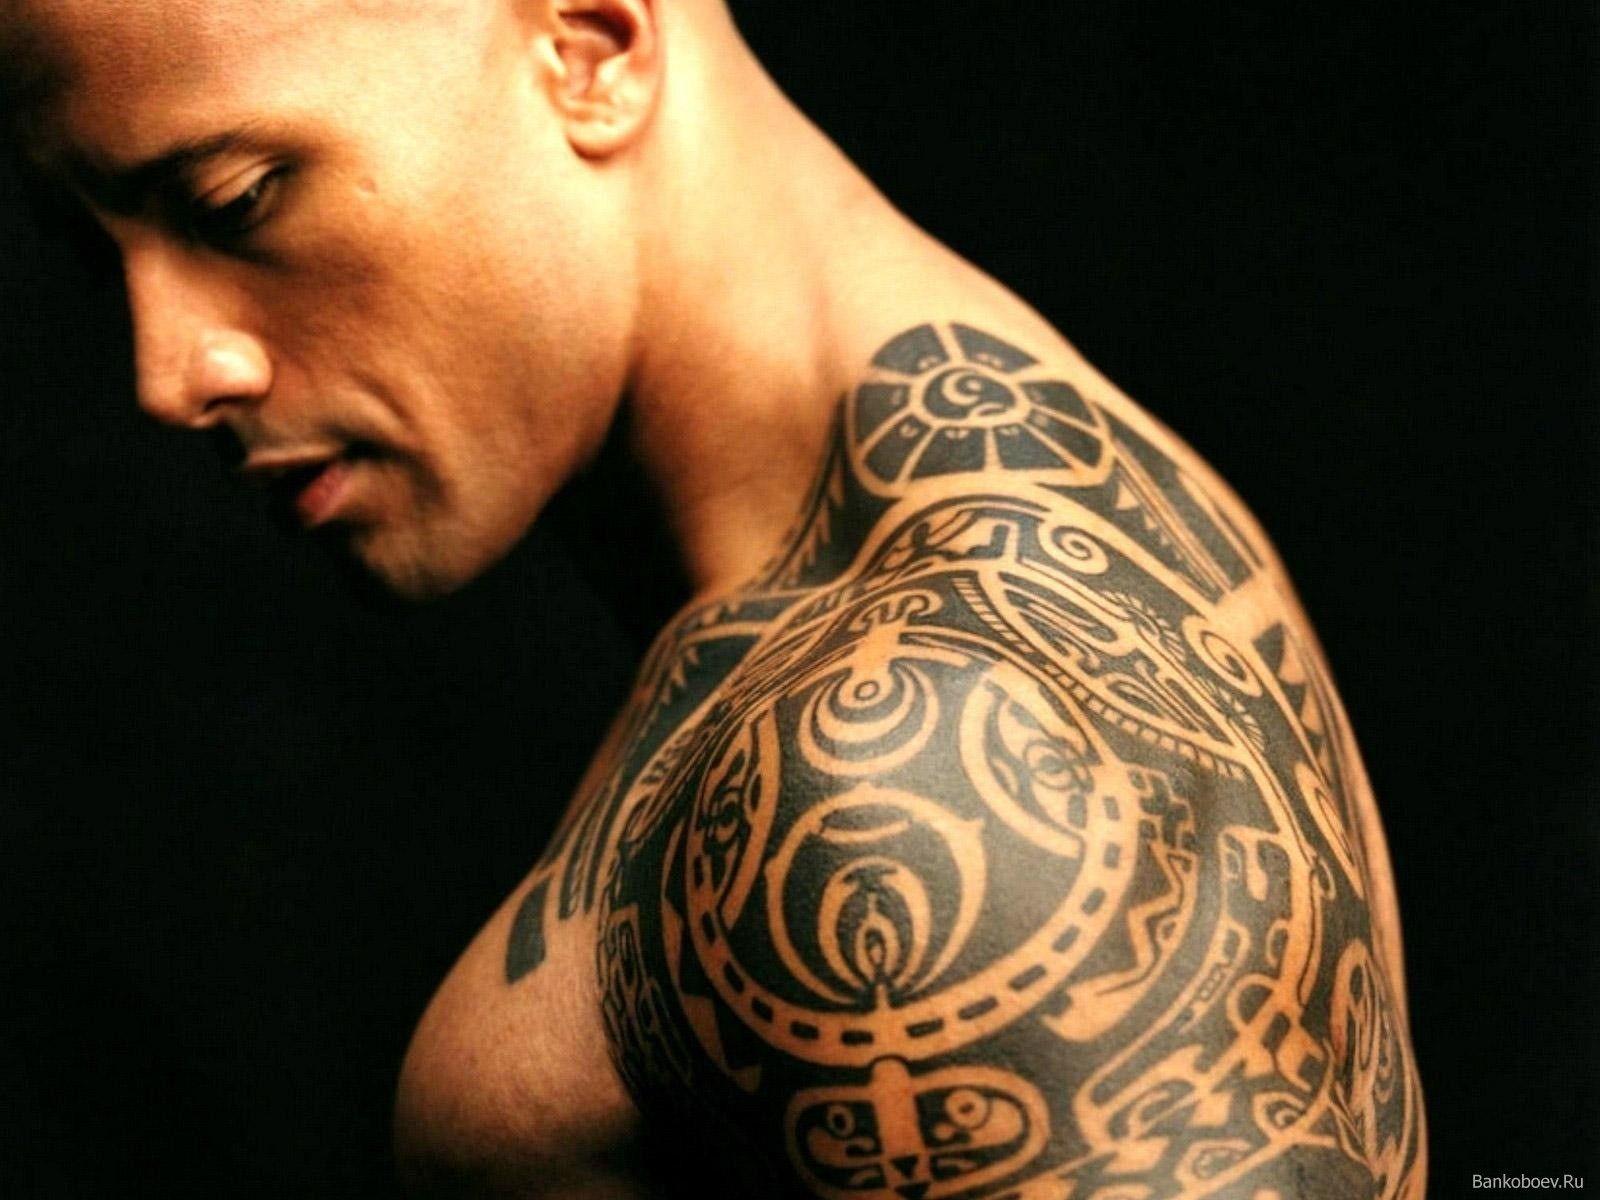 tattoos men the rock actors wwe world wrestling entertainment